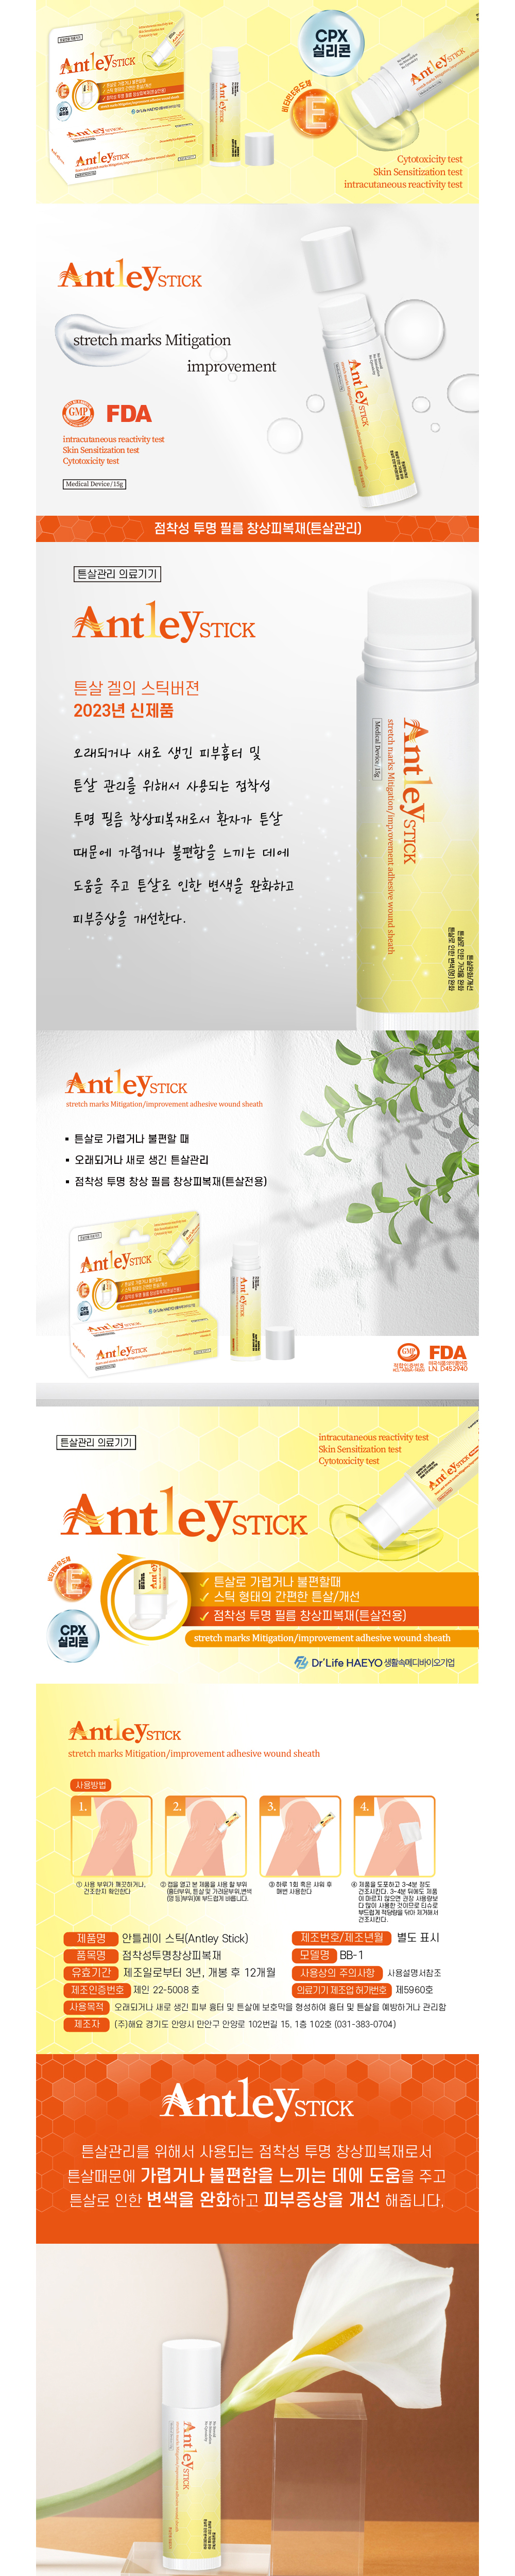 cosmetics product image-S5L1